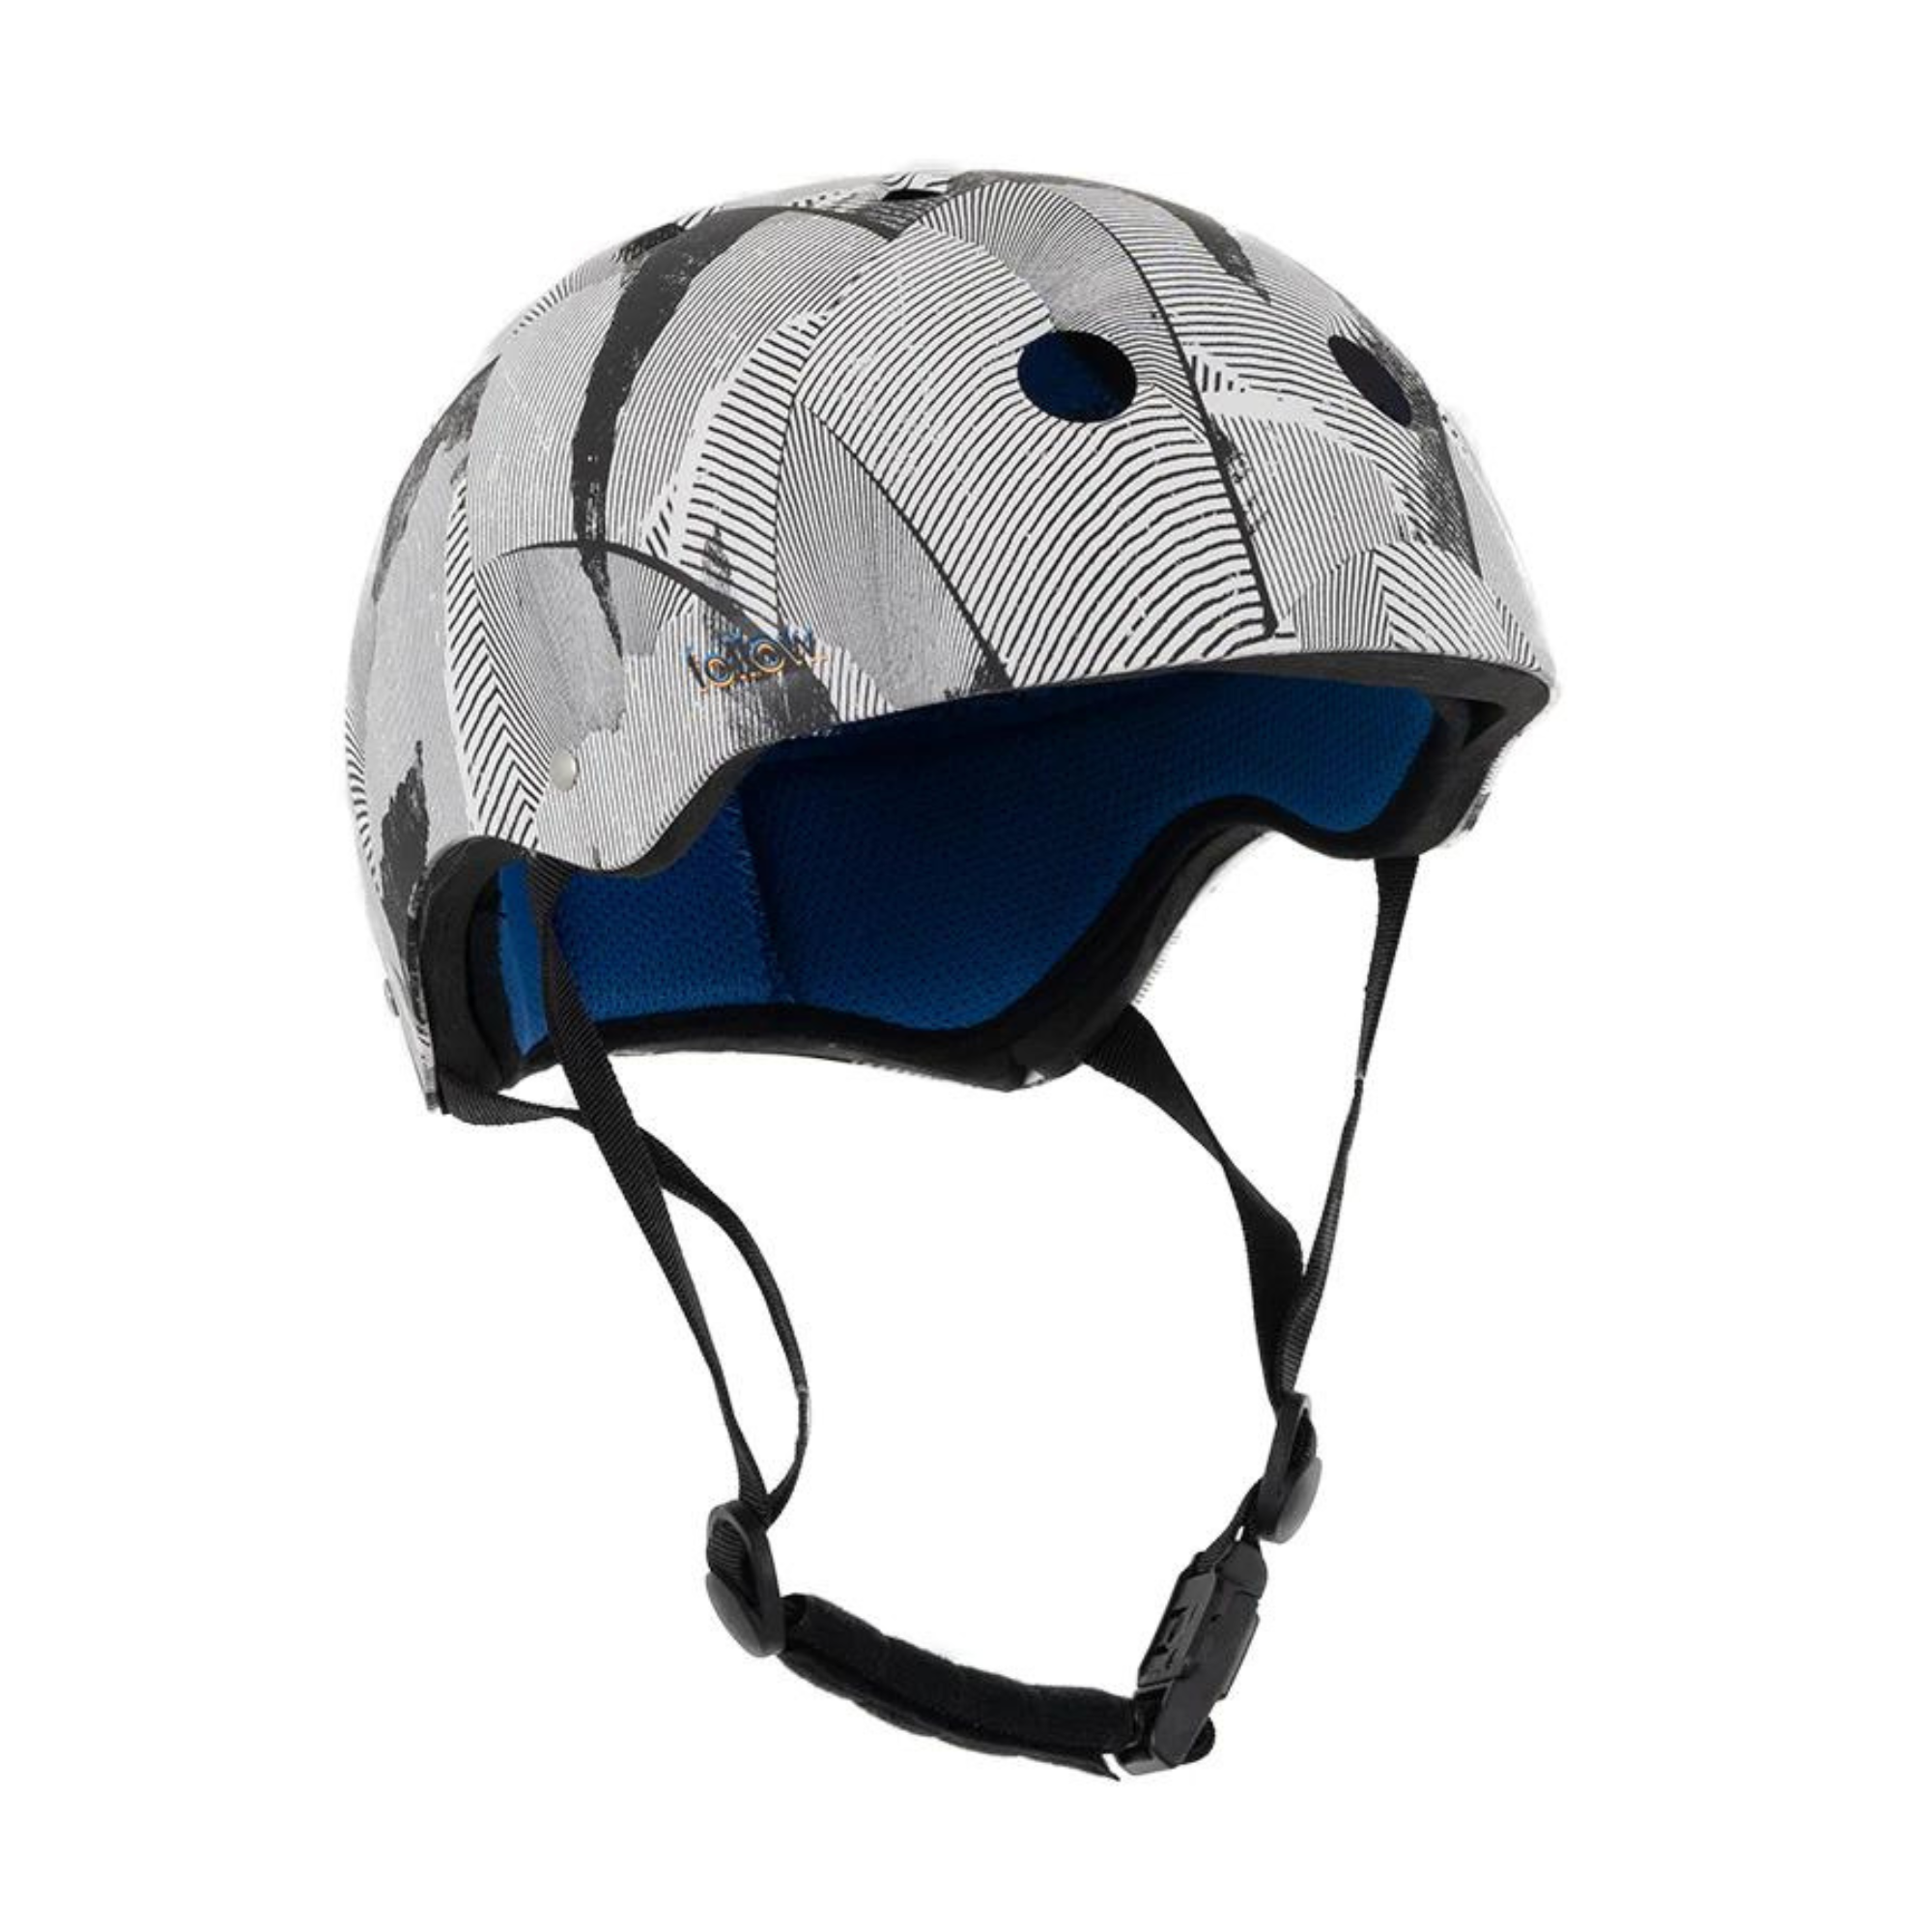 Follow Pro Graphic Helmet - Order White